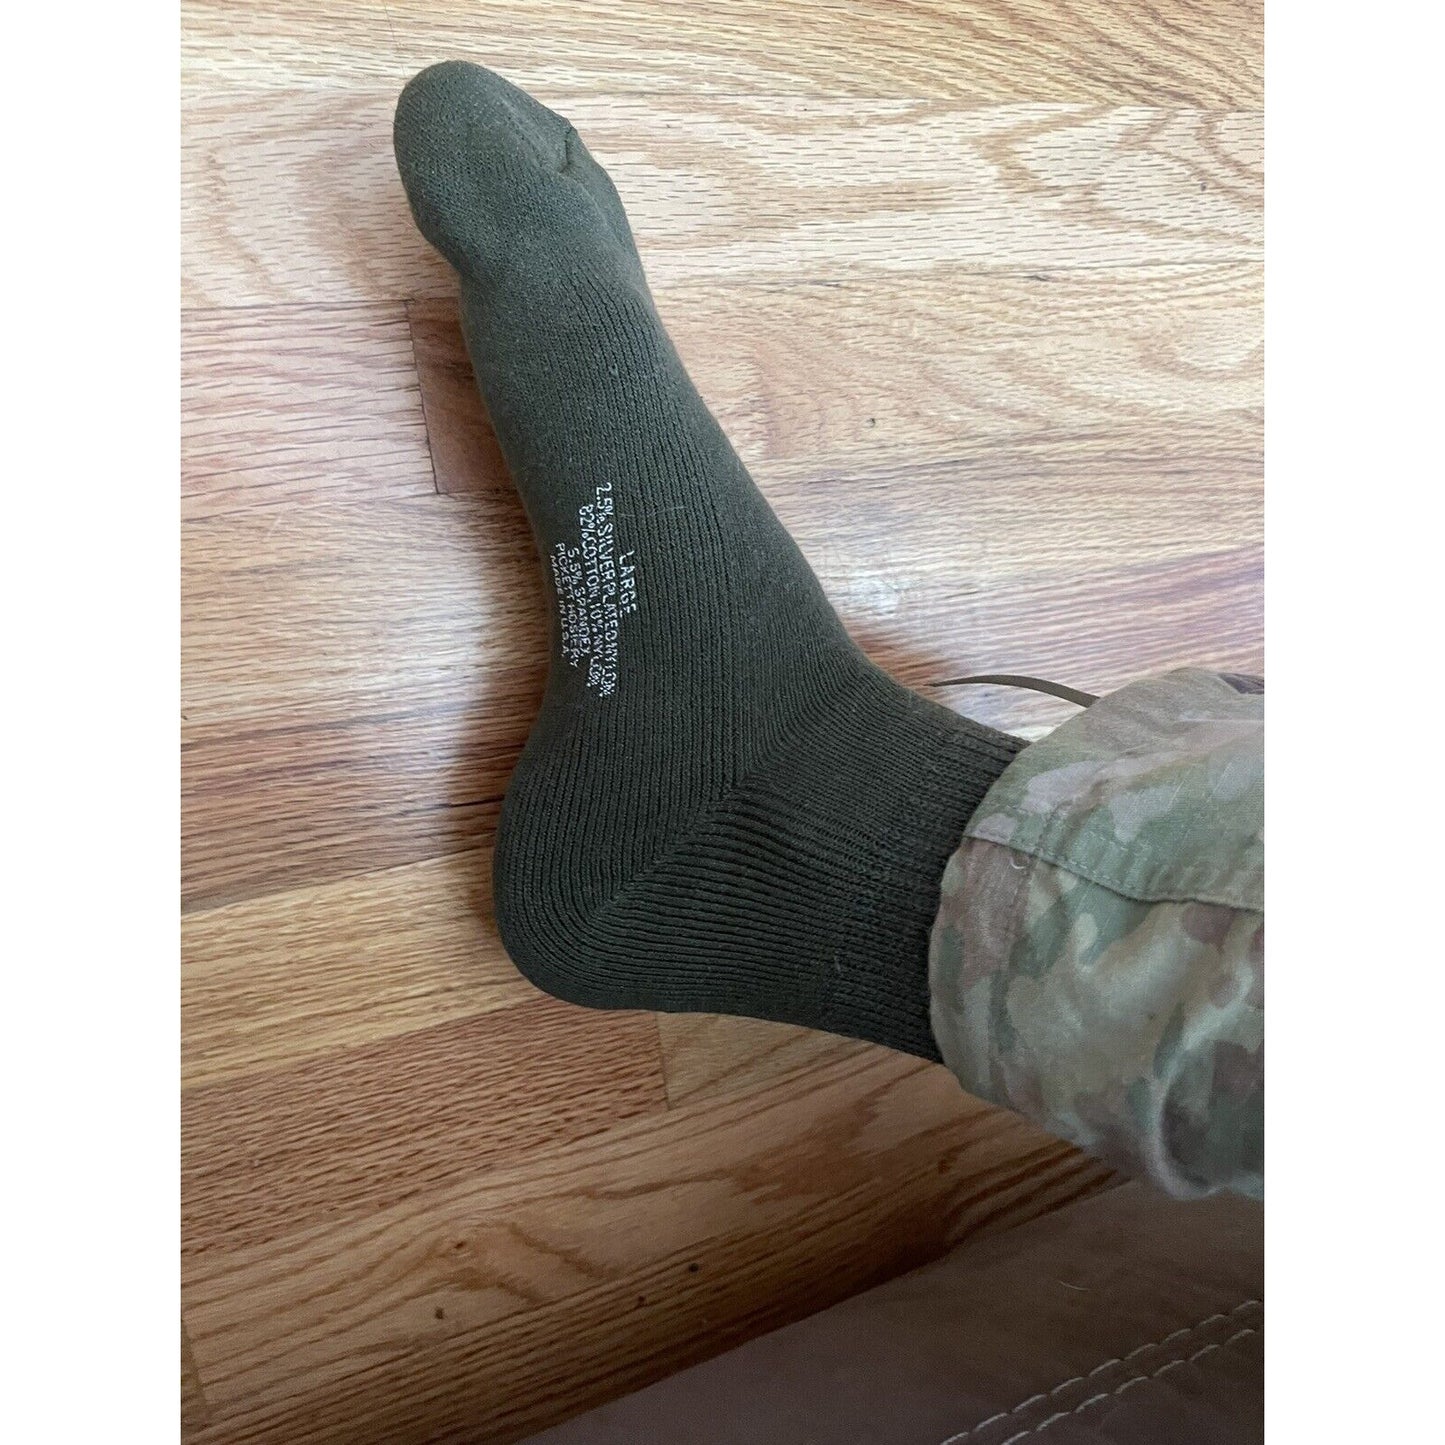 Military Defense Logistics Agency Boot socks L Olive  Green 80% cotton18% nylon